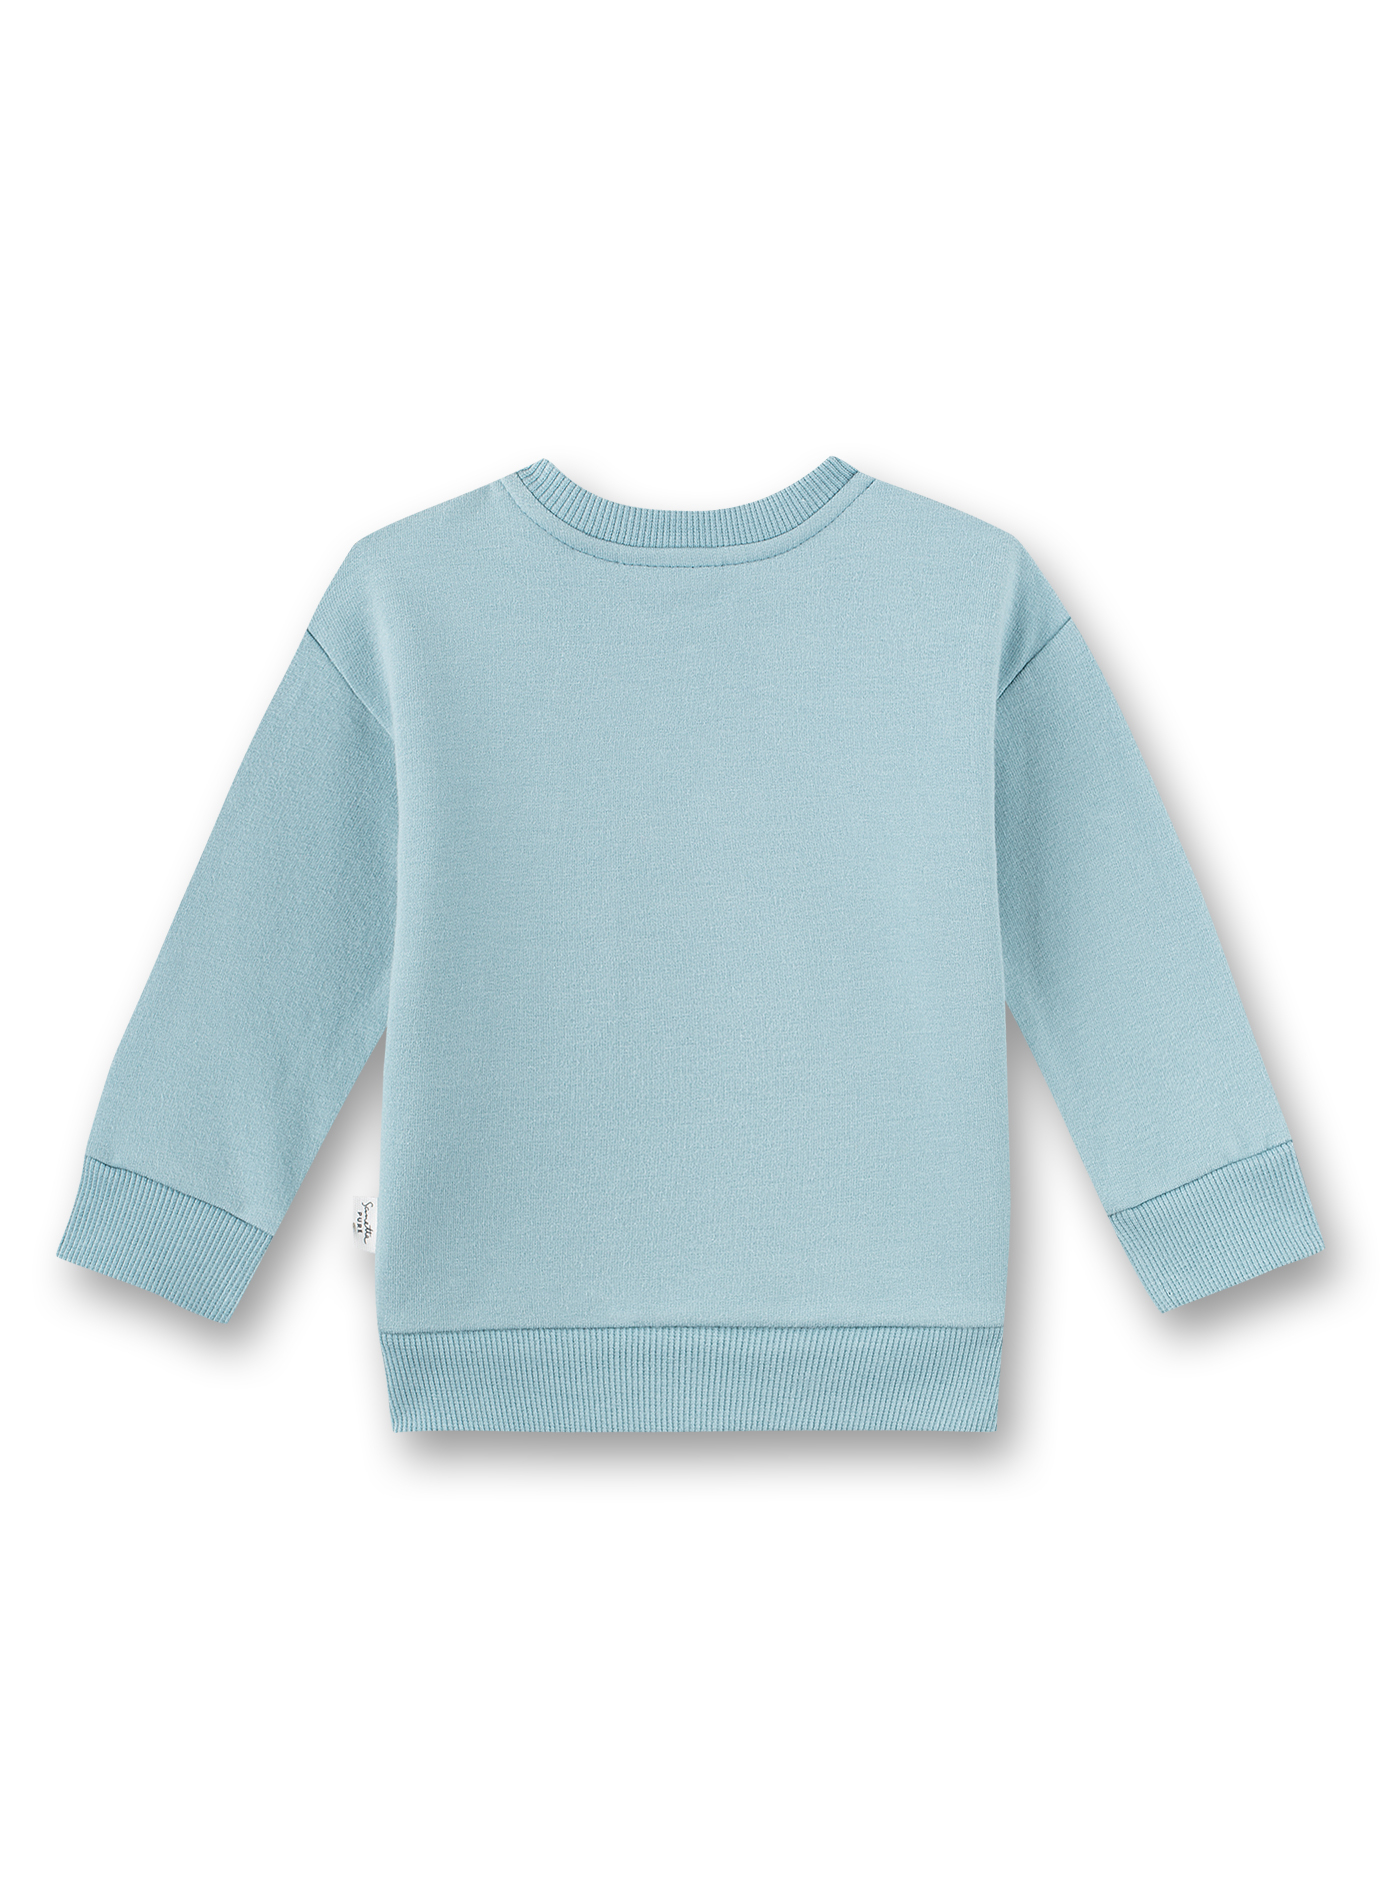 Jungen-Sweatshirt Hellblau